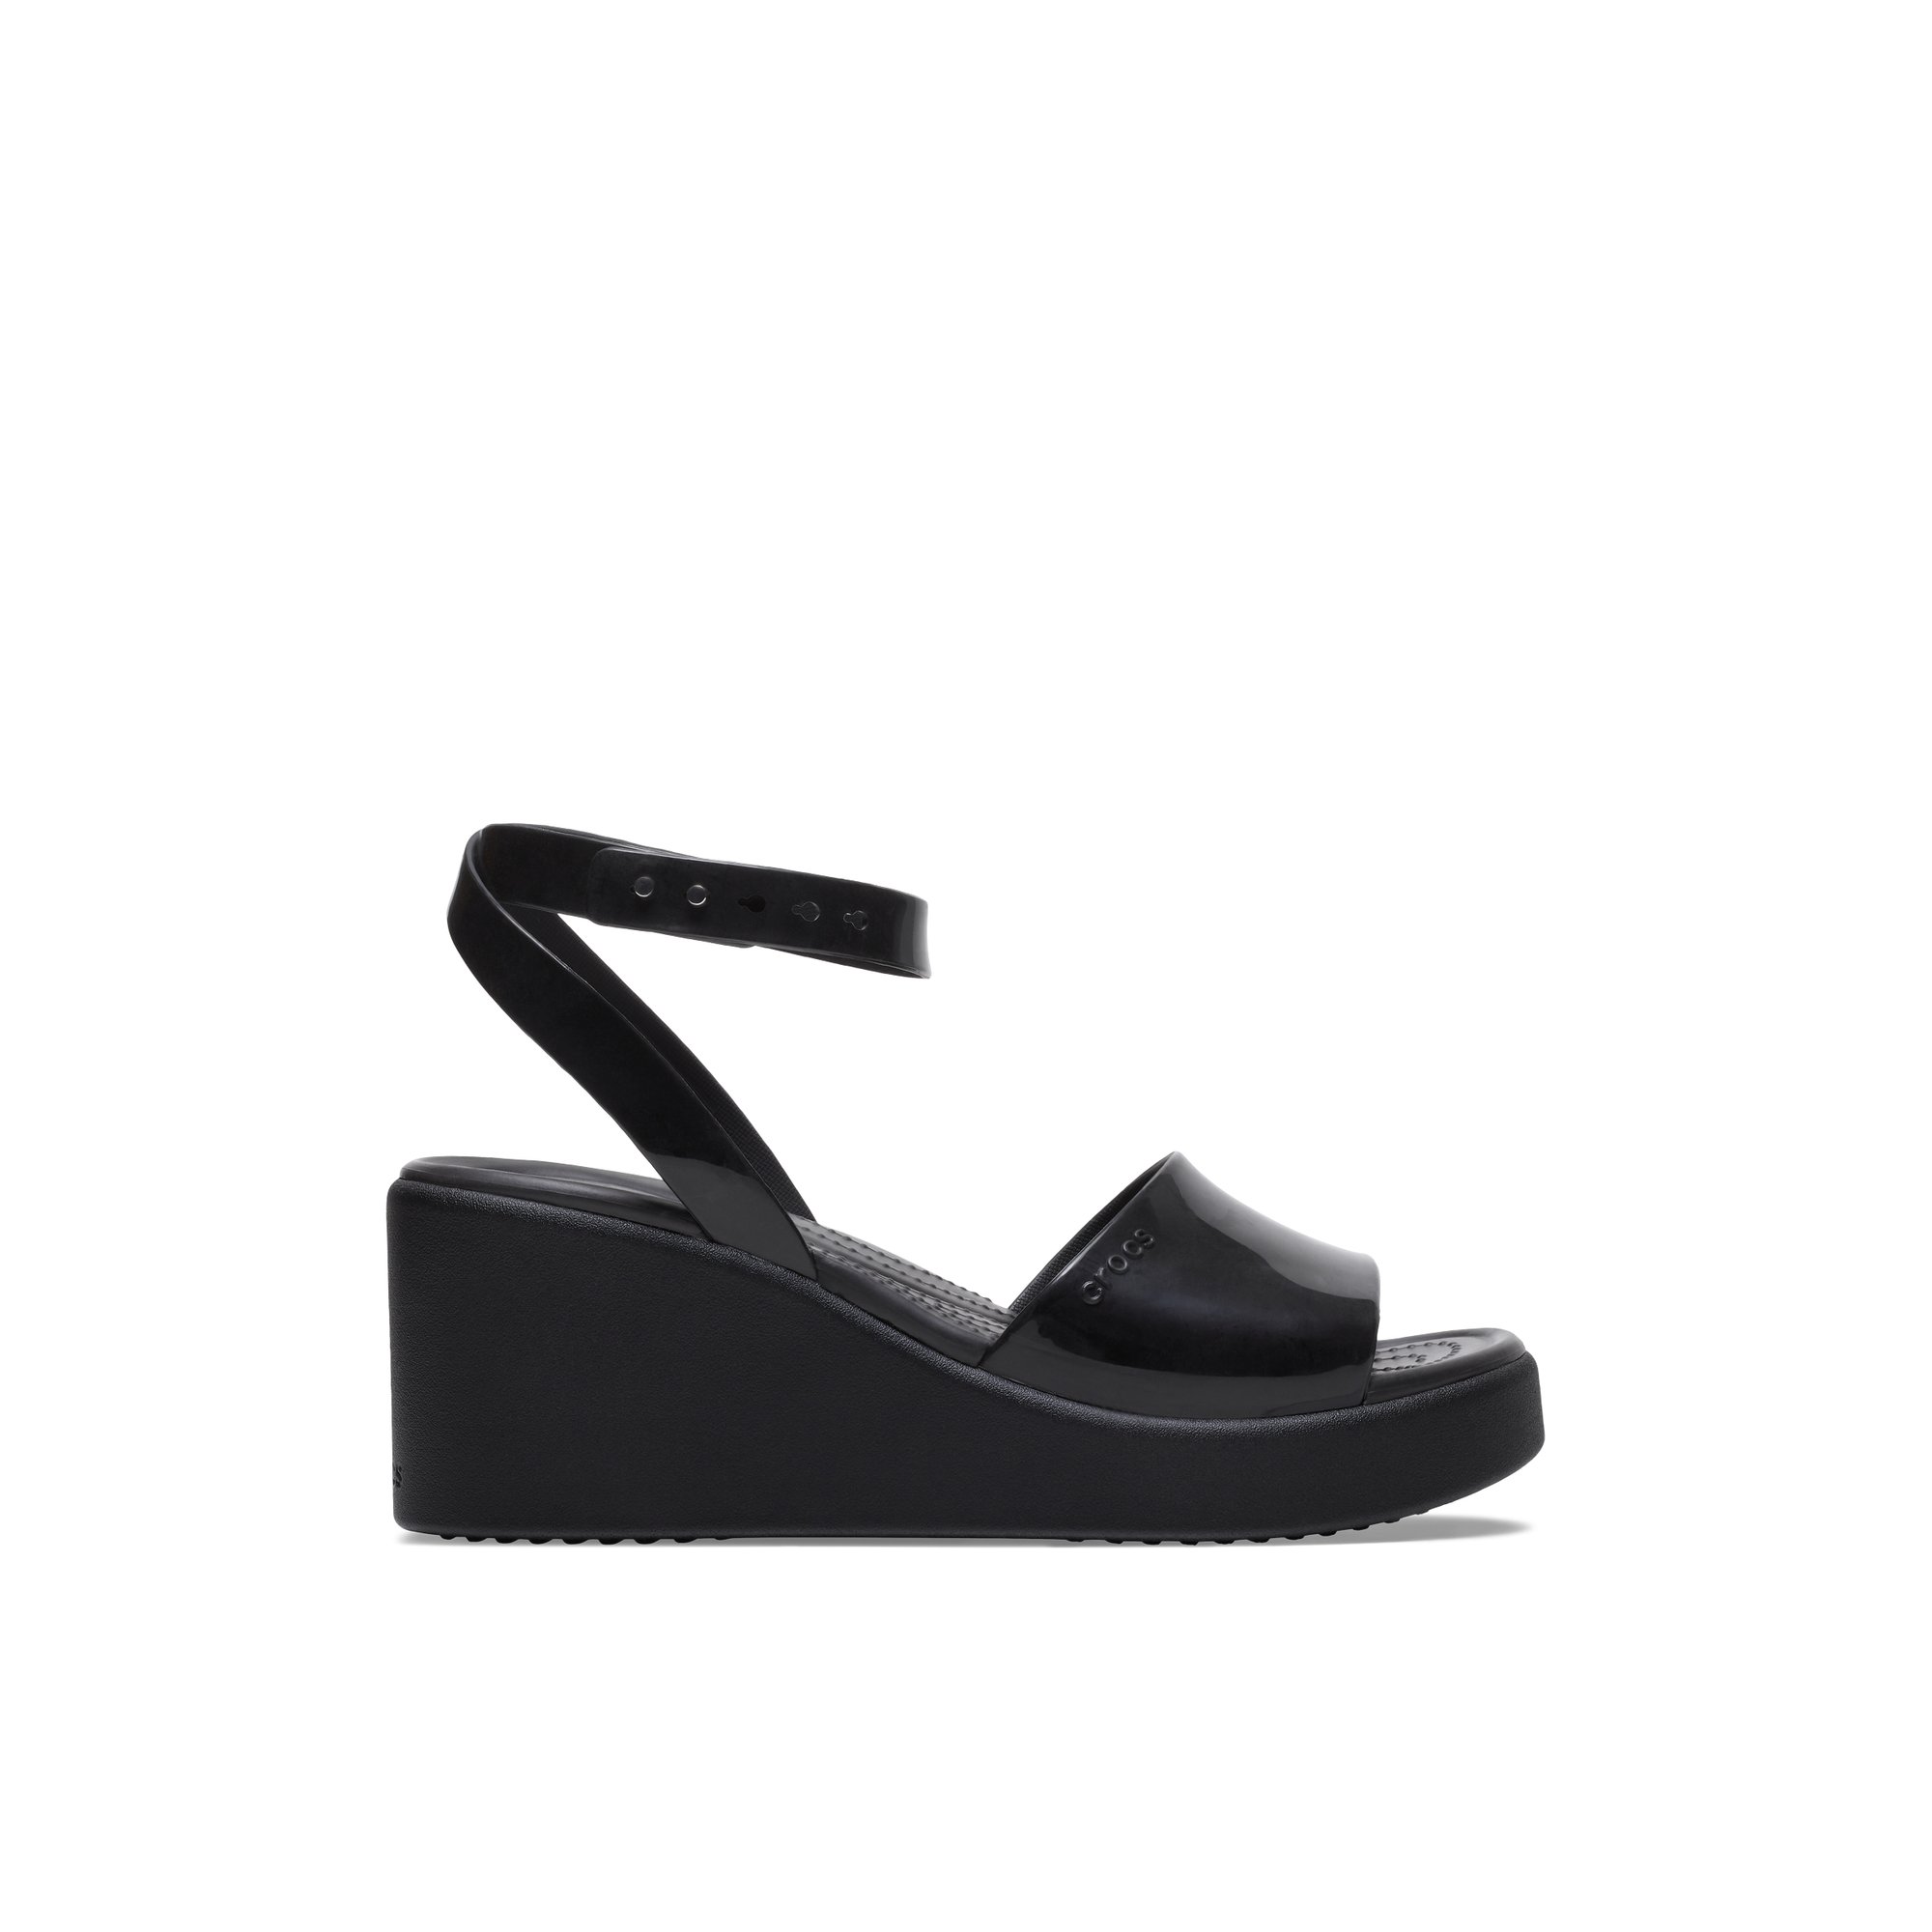 Crocs Brooklyn w - Women's Footwear Sandals Wedges Black